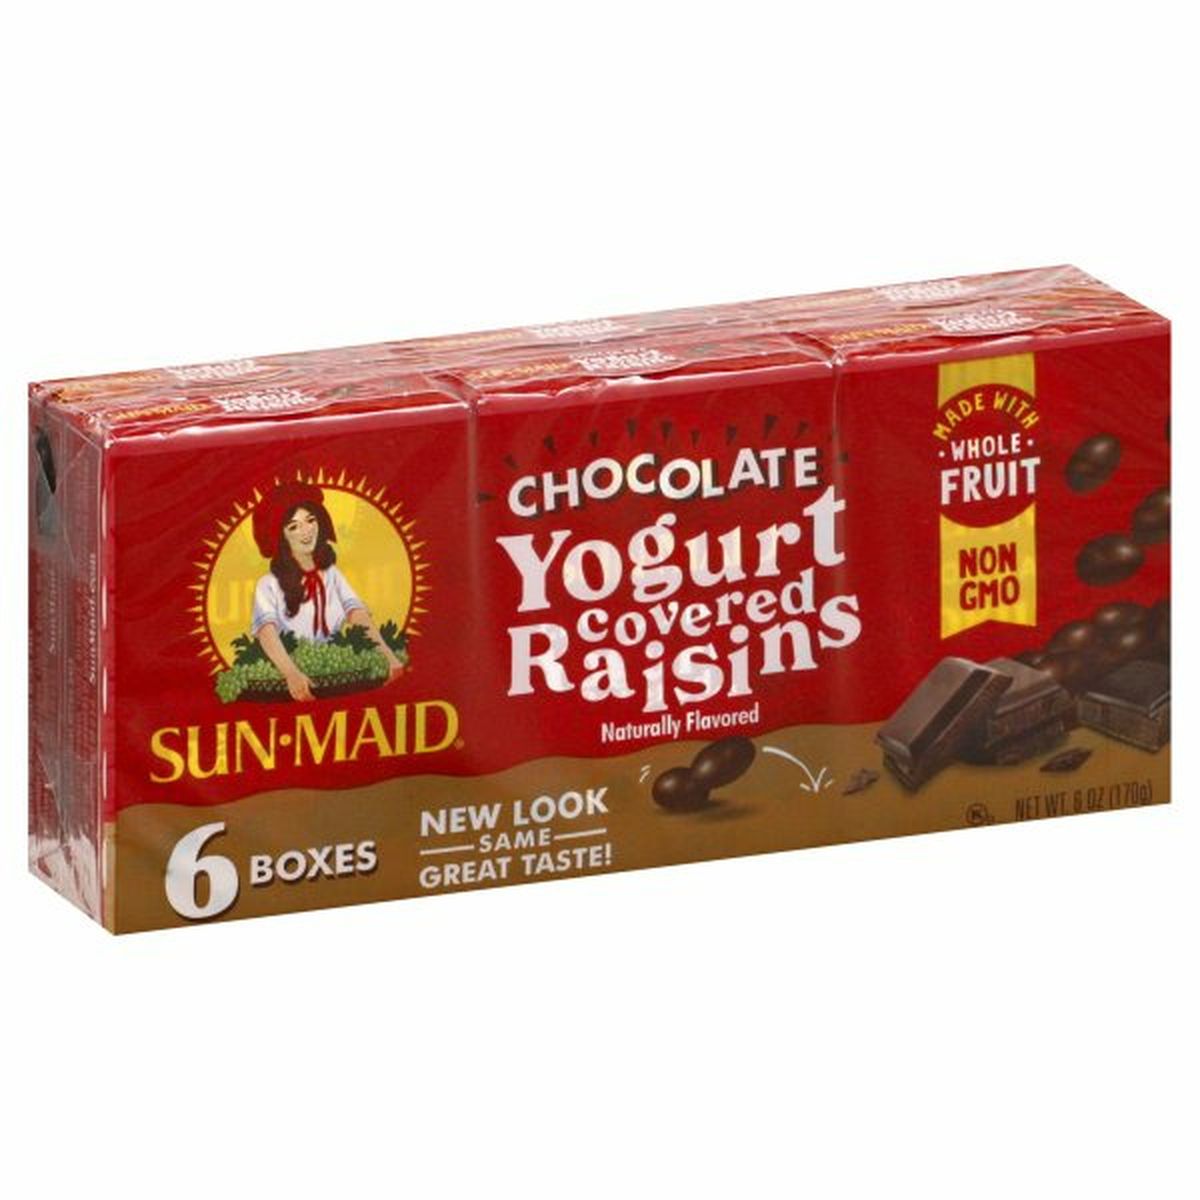 Calories in Sun-Maid Yogurt Covered Raisins, Chocolate, 6 Boxes